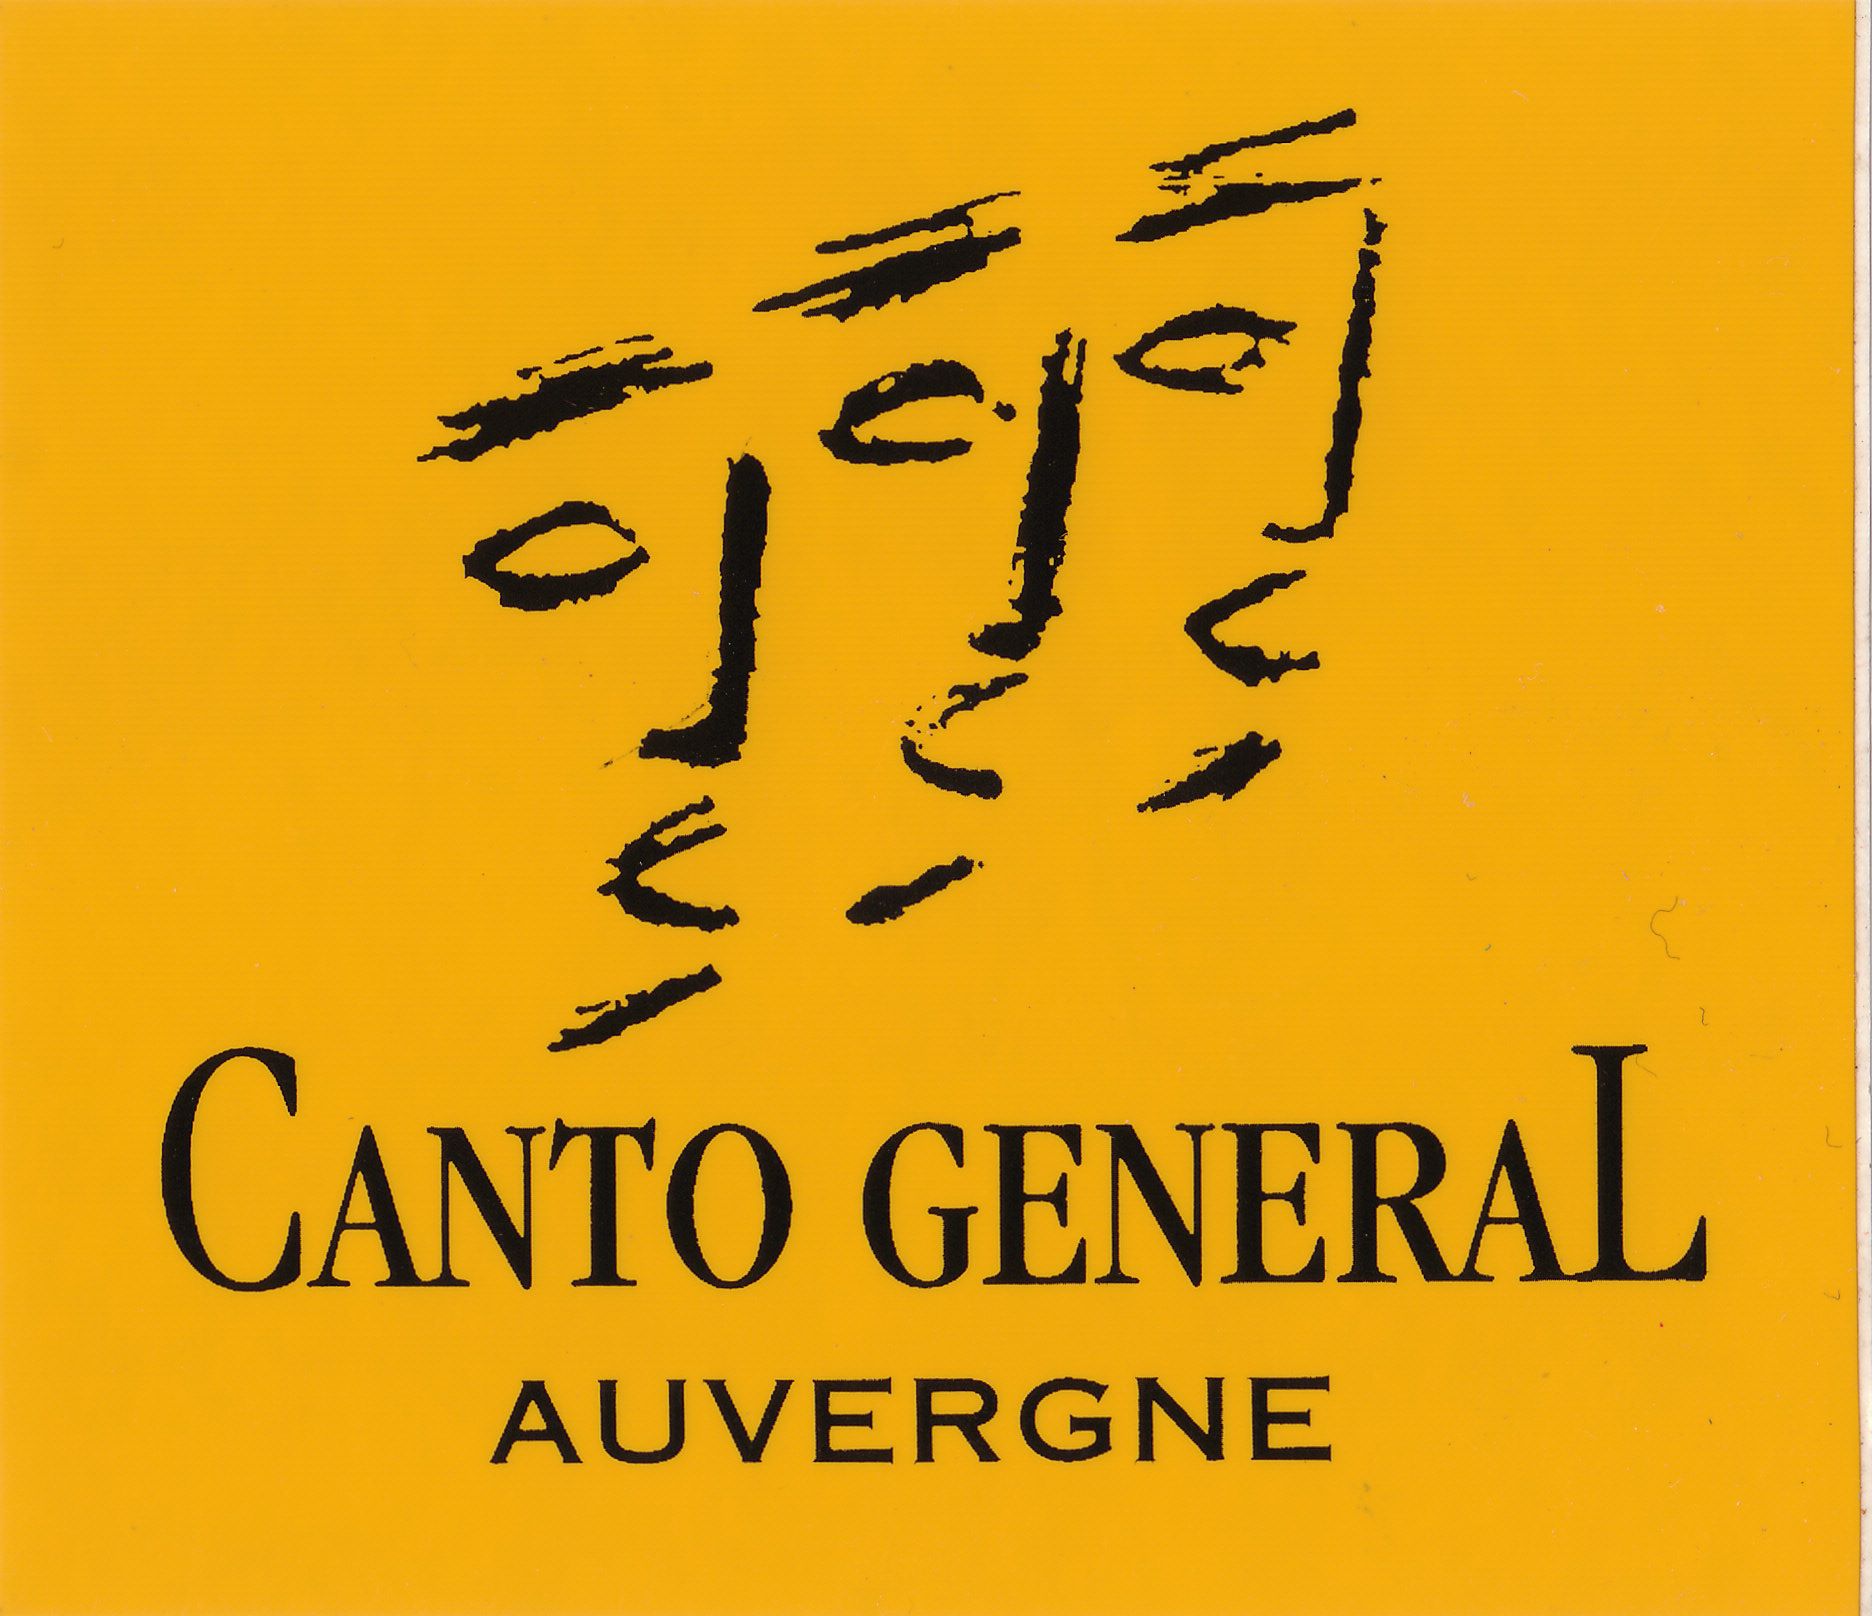 Canto General Auvergne